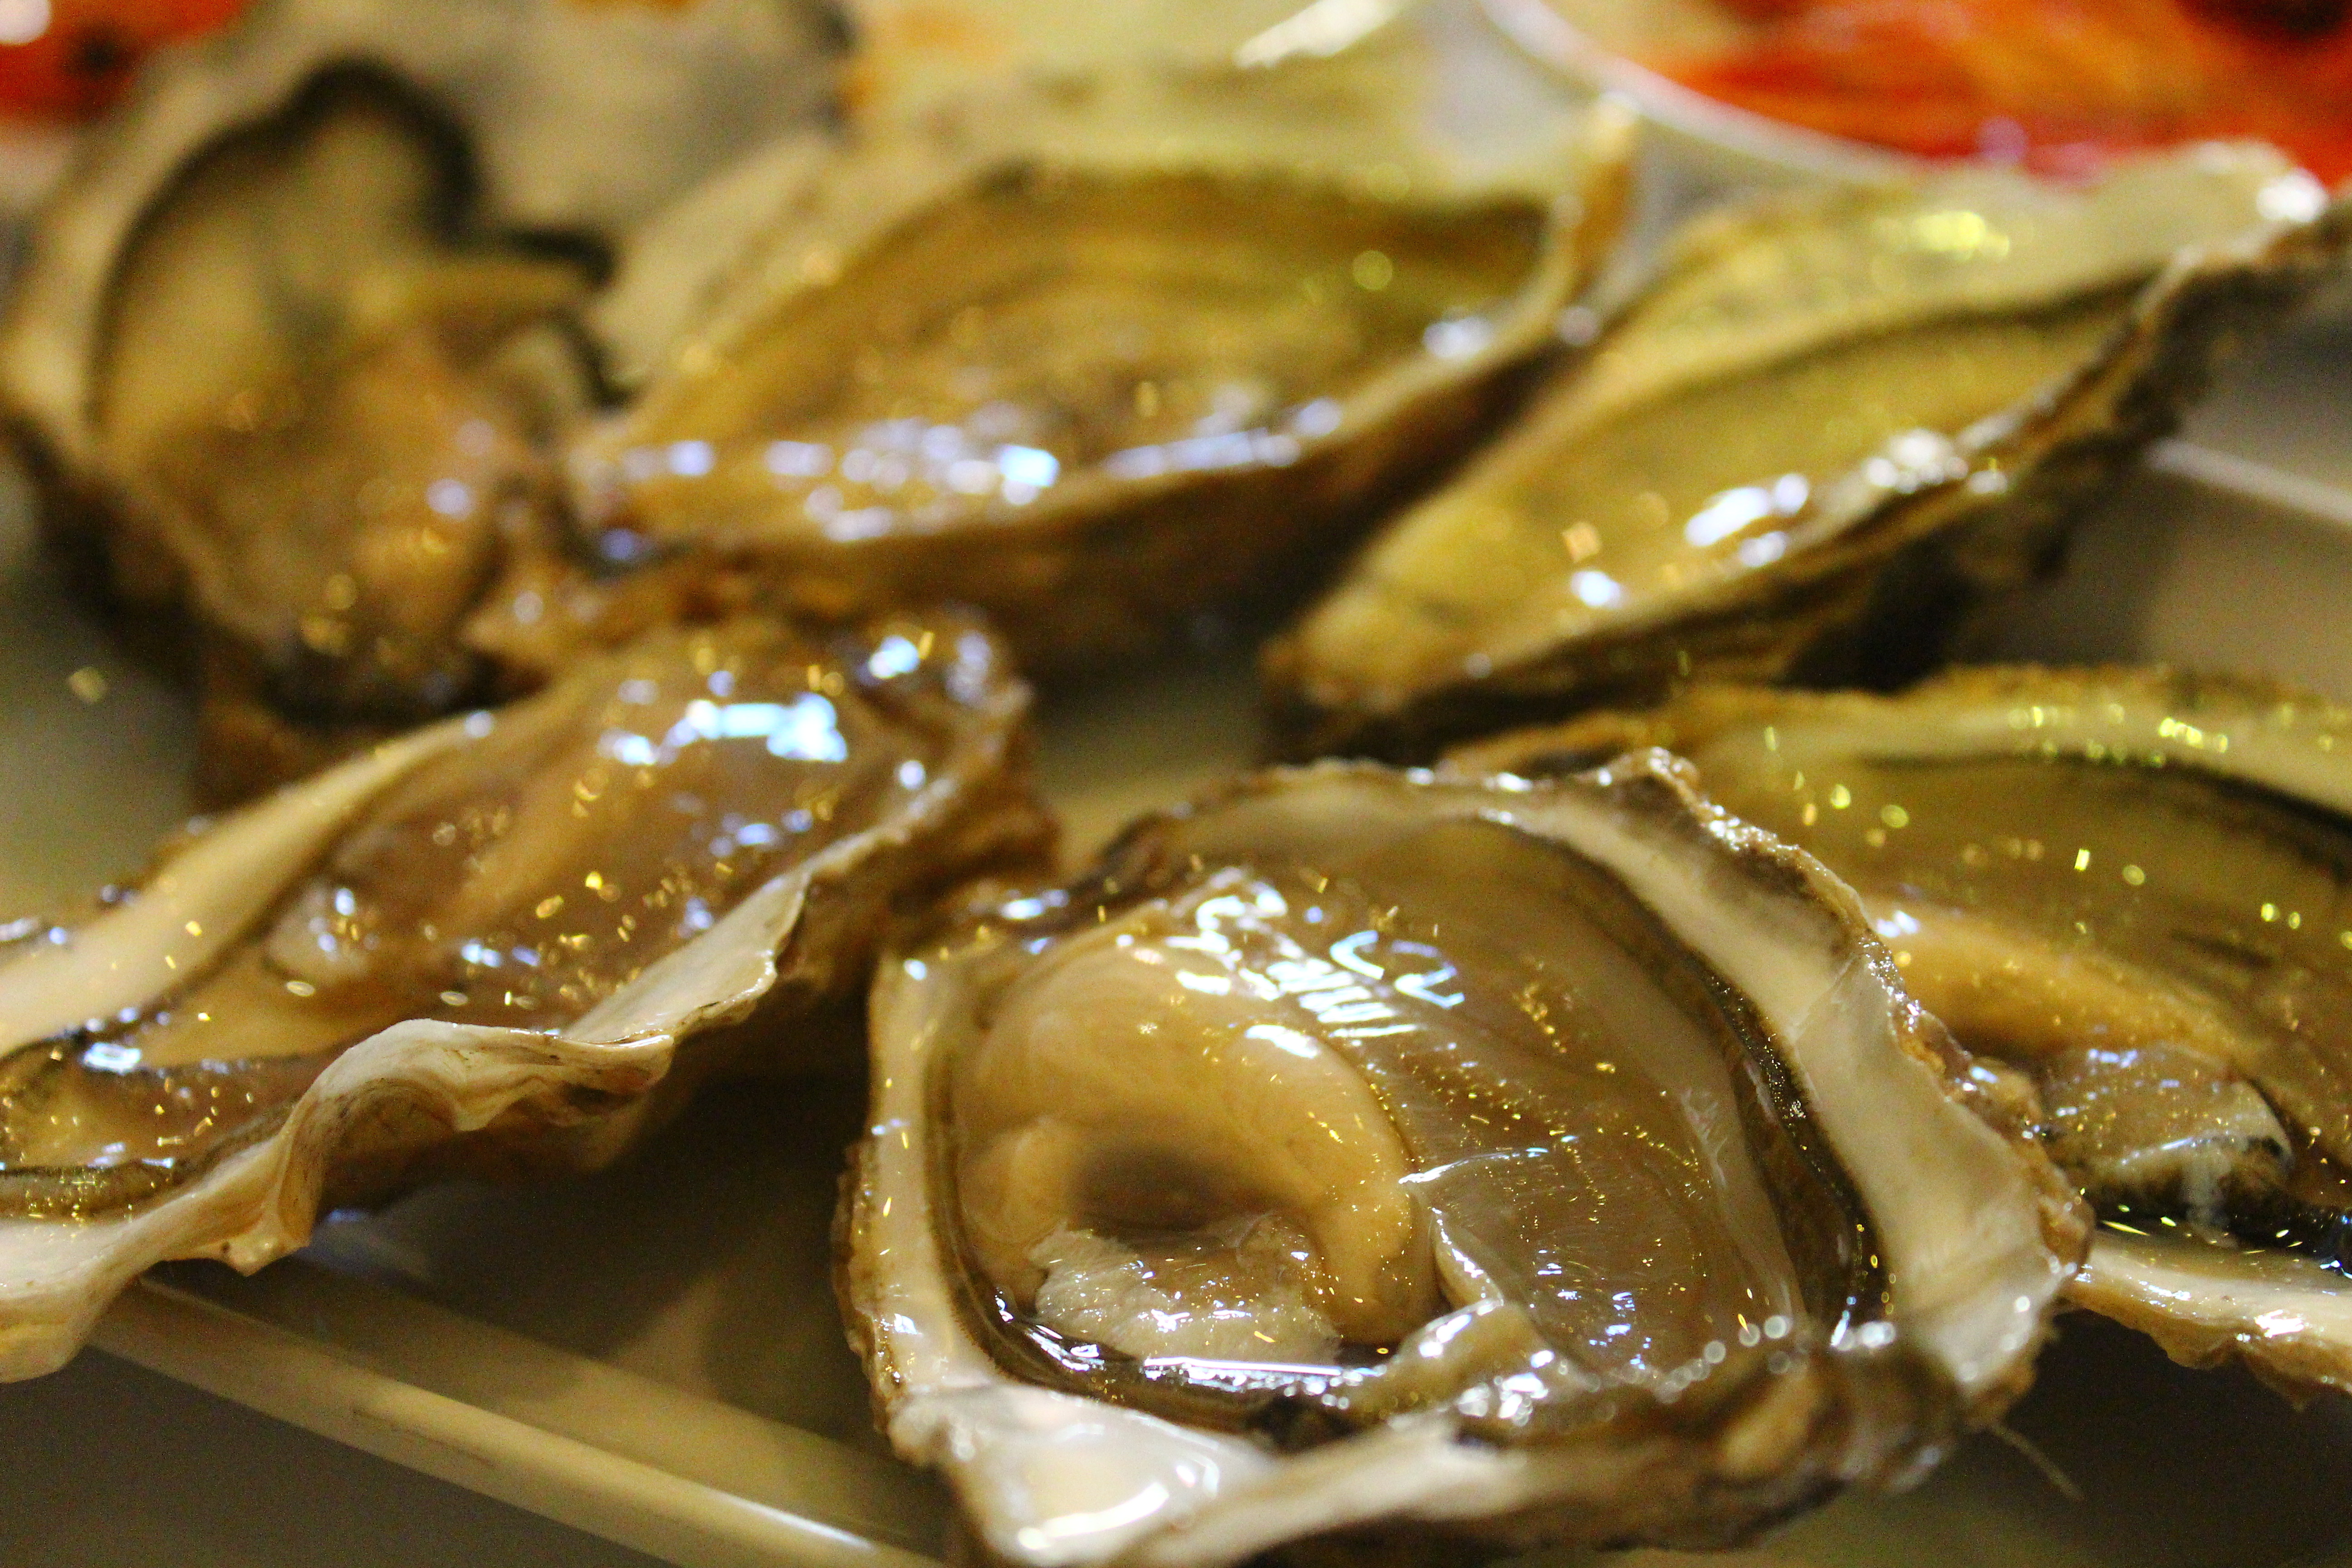 Cervejaria Ramiro seafood lisbon oysters